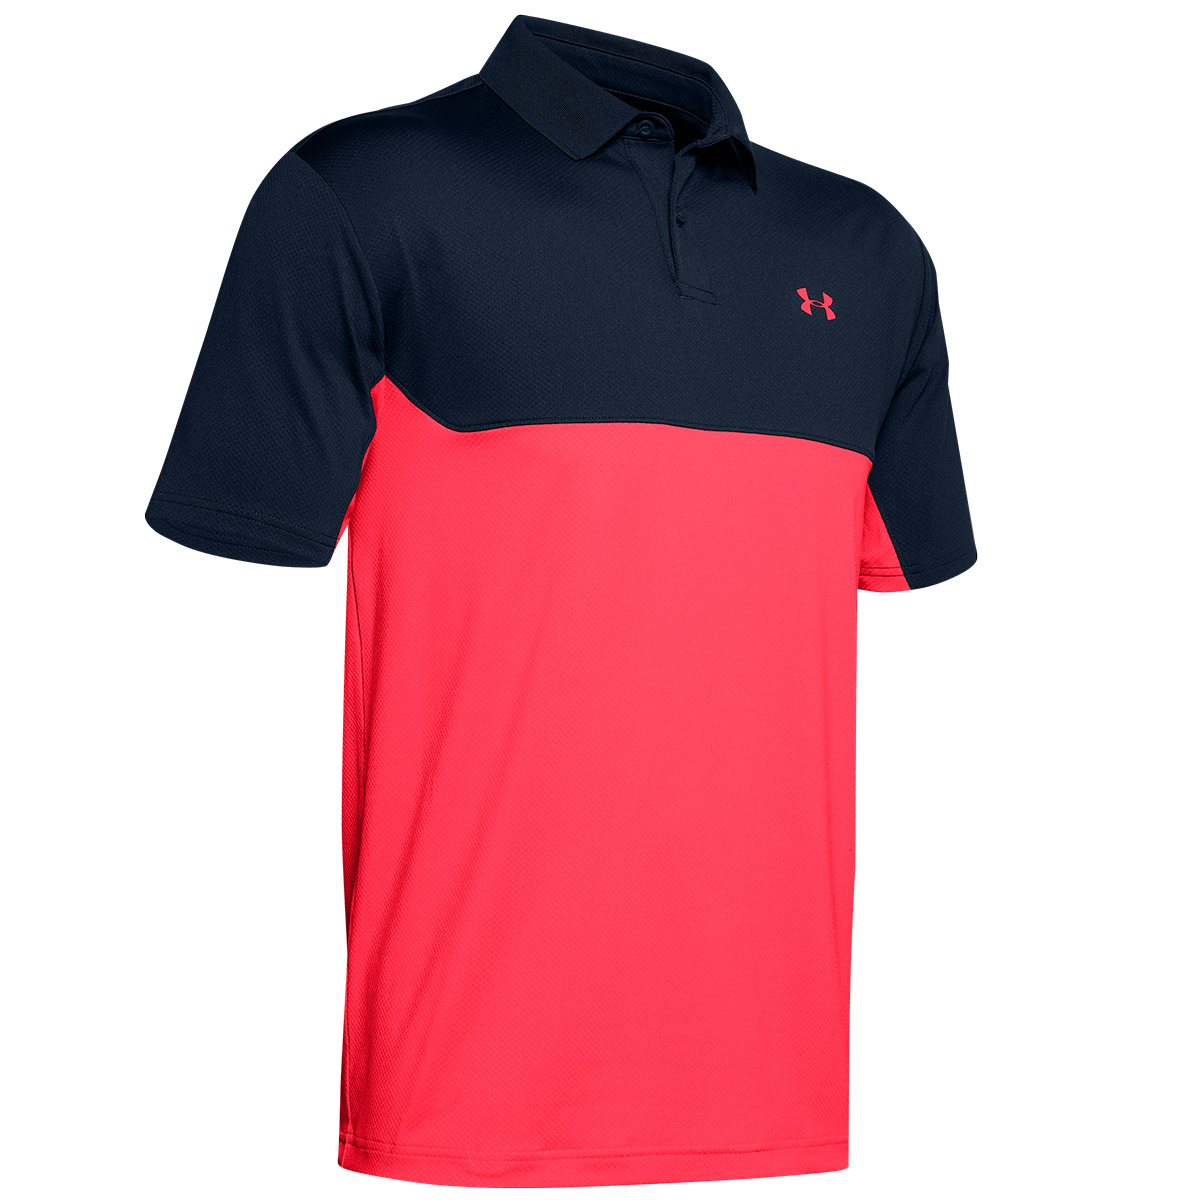 Under Men's Performance 2.0 Colourblock Golf Polo Shirt from american golf